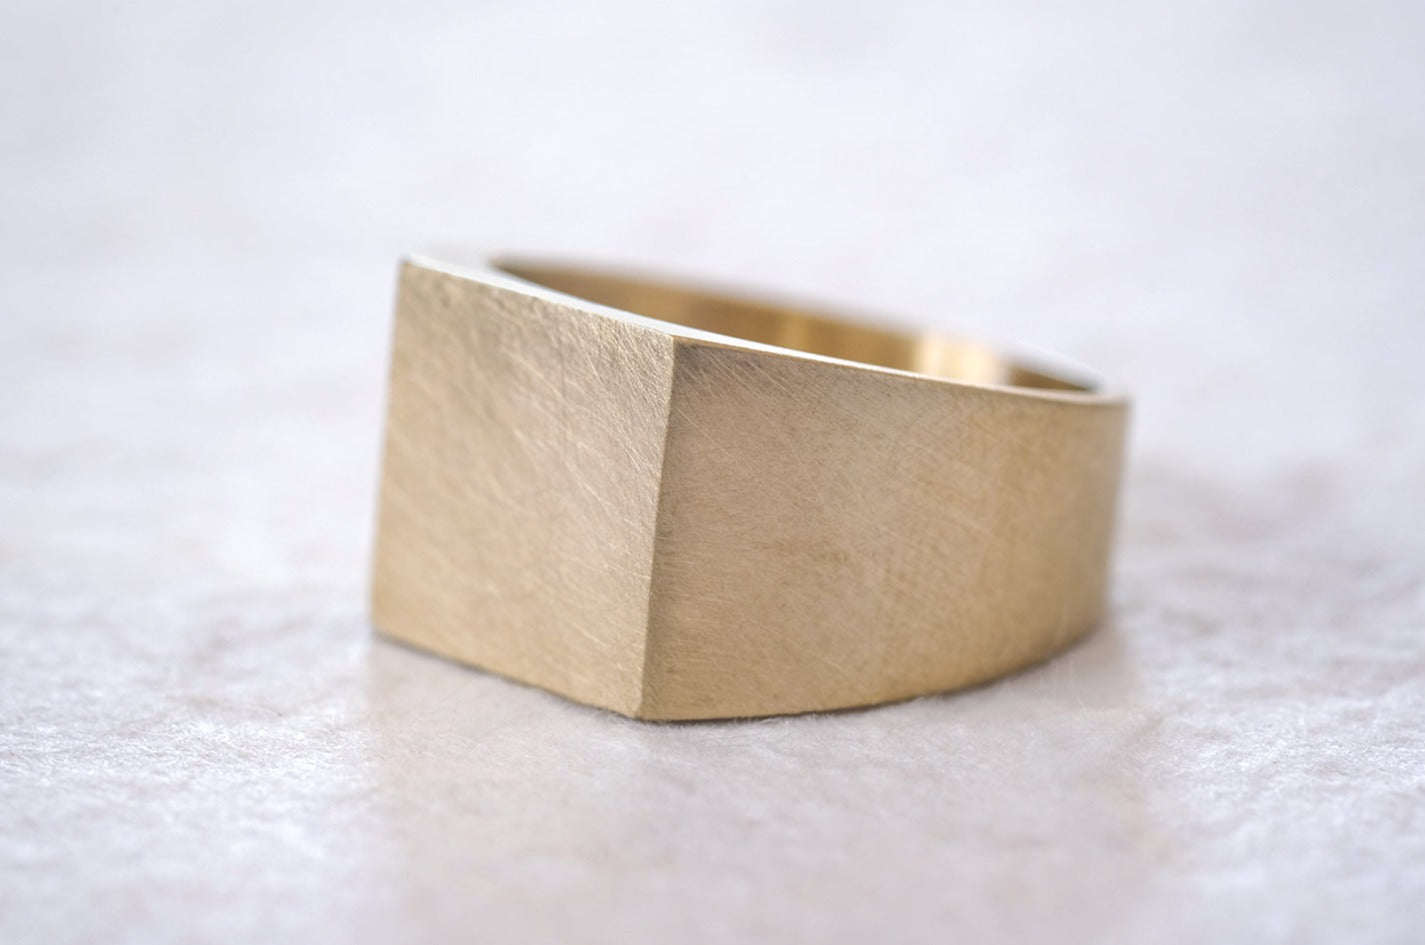 An Impressive Gold Signet Ring